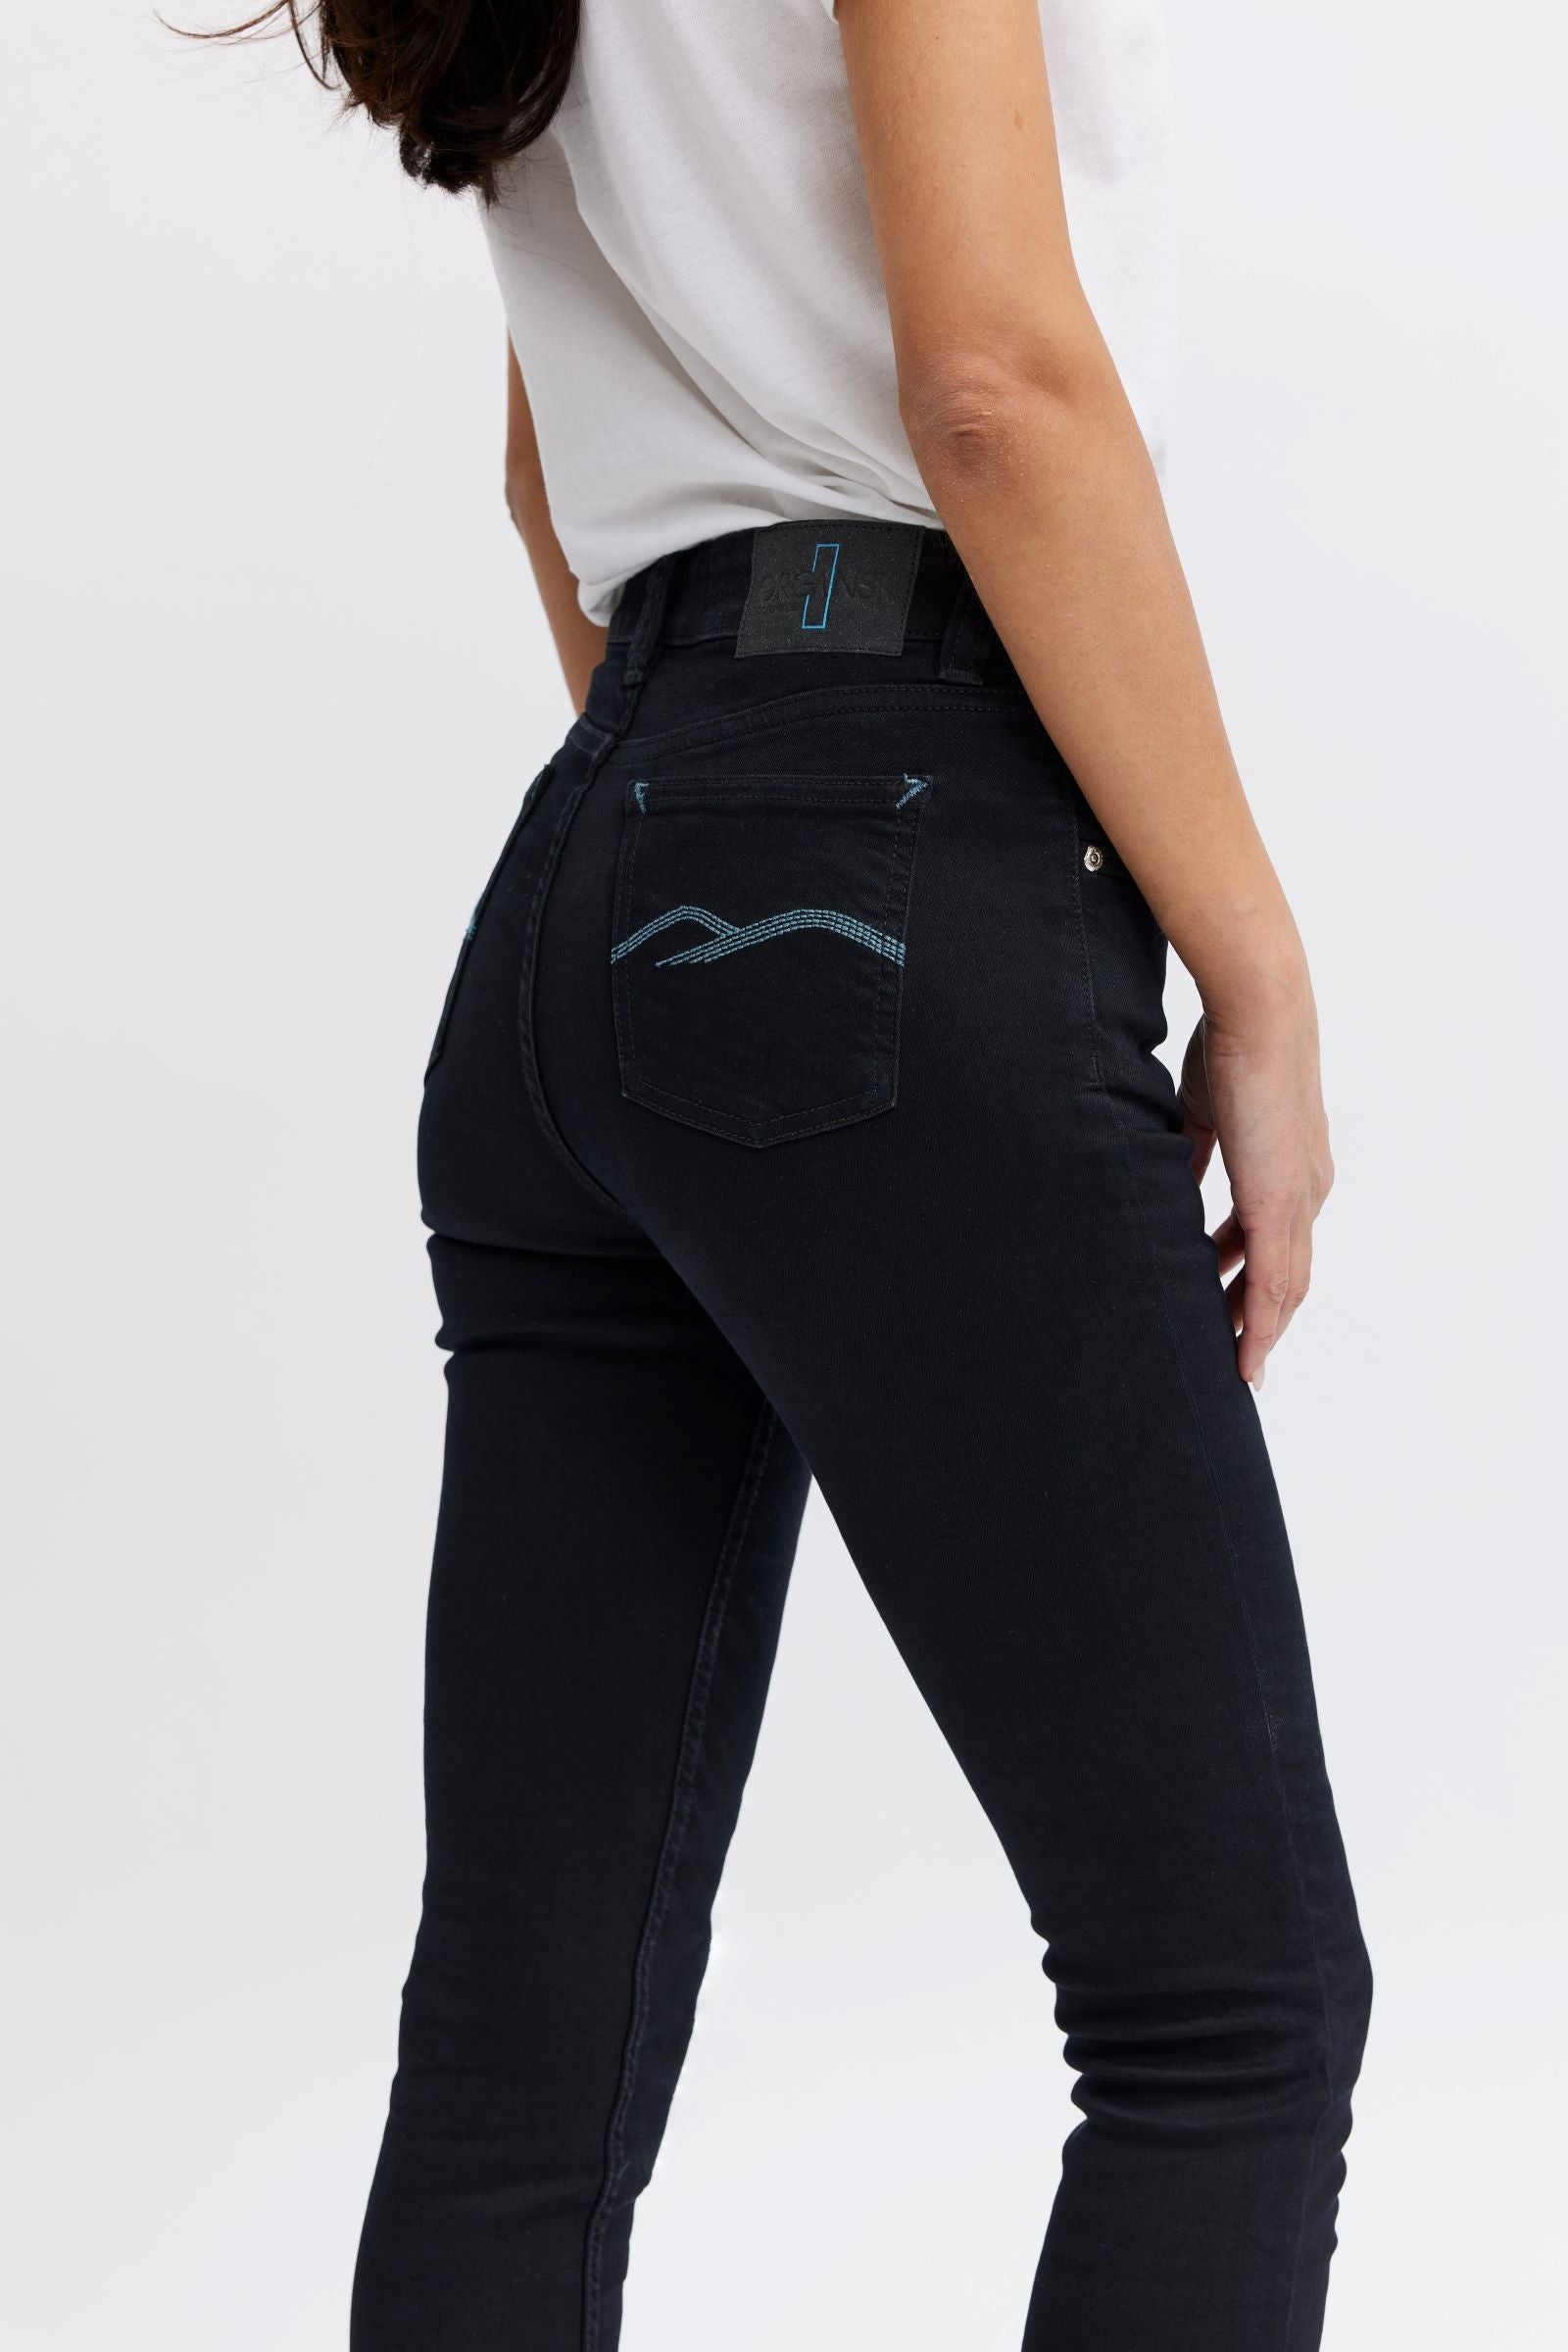 Organic slim fit black jeans for women